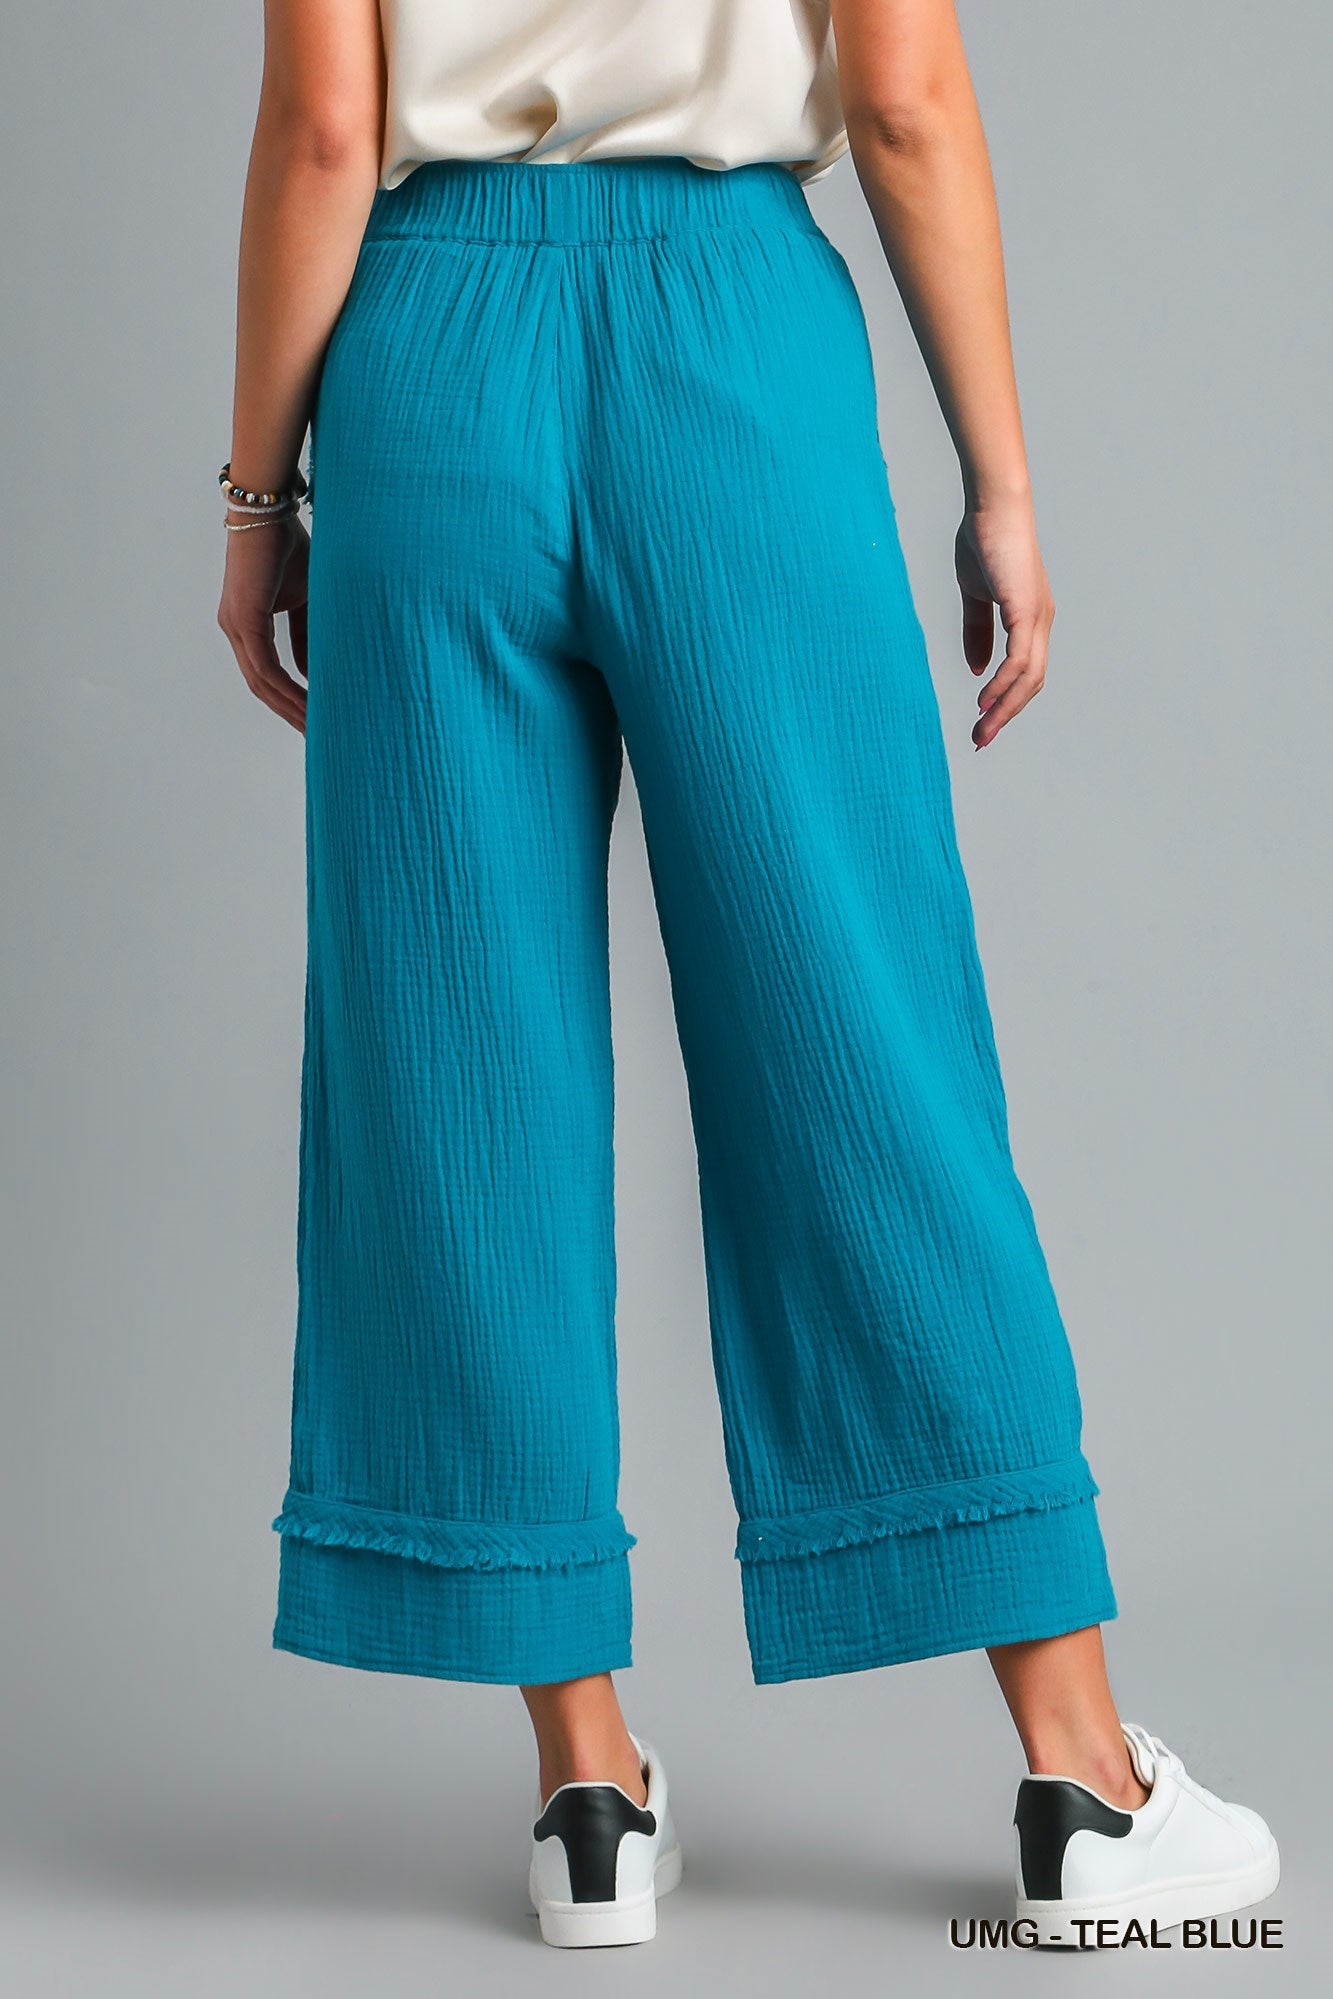 Teal Blue Wide Leg Pants with Elastic Waist Band , Unfished Frayed Hem & Side Pockets